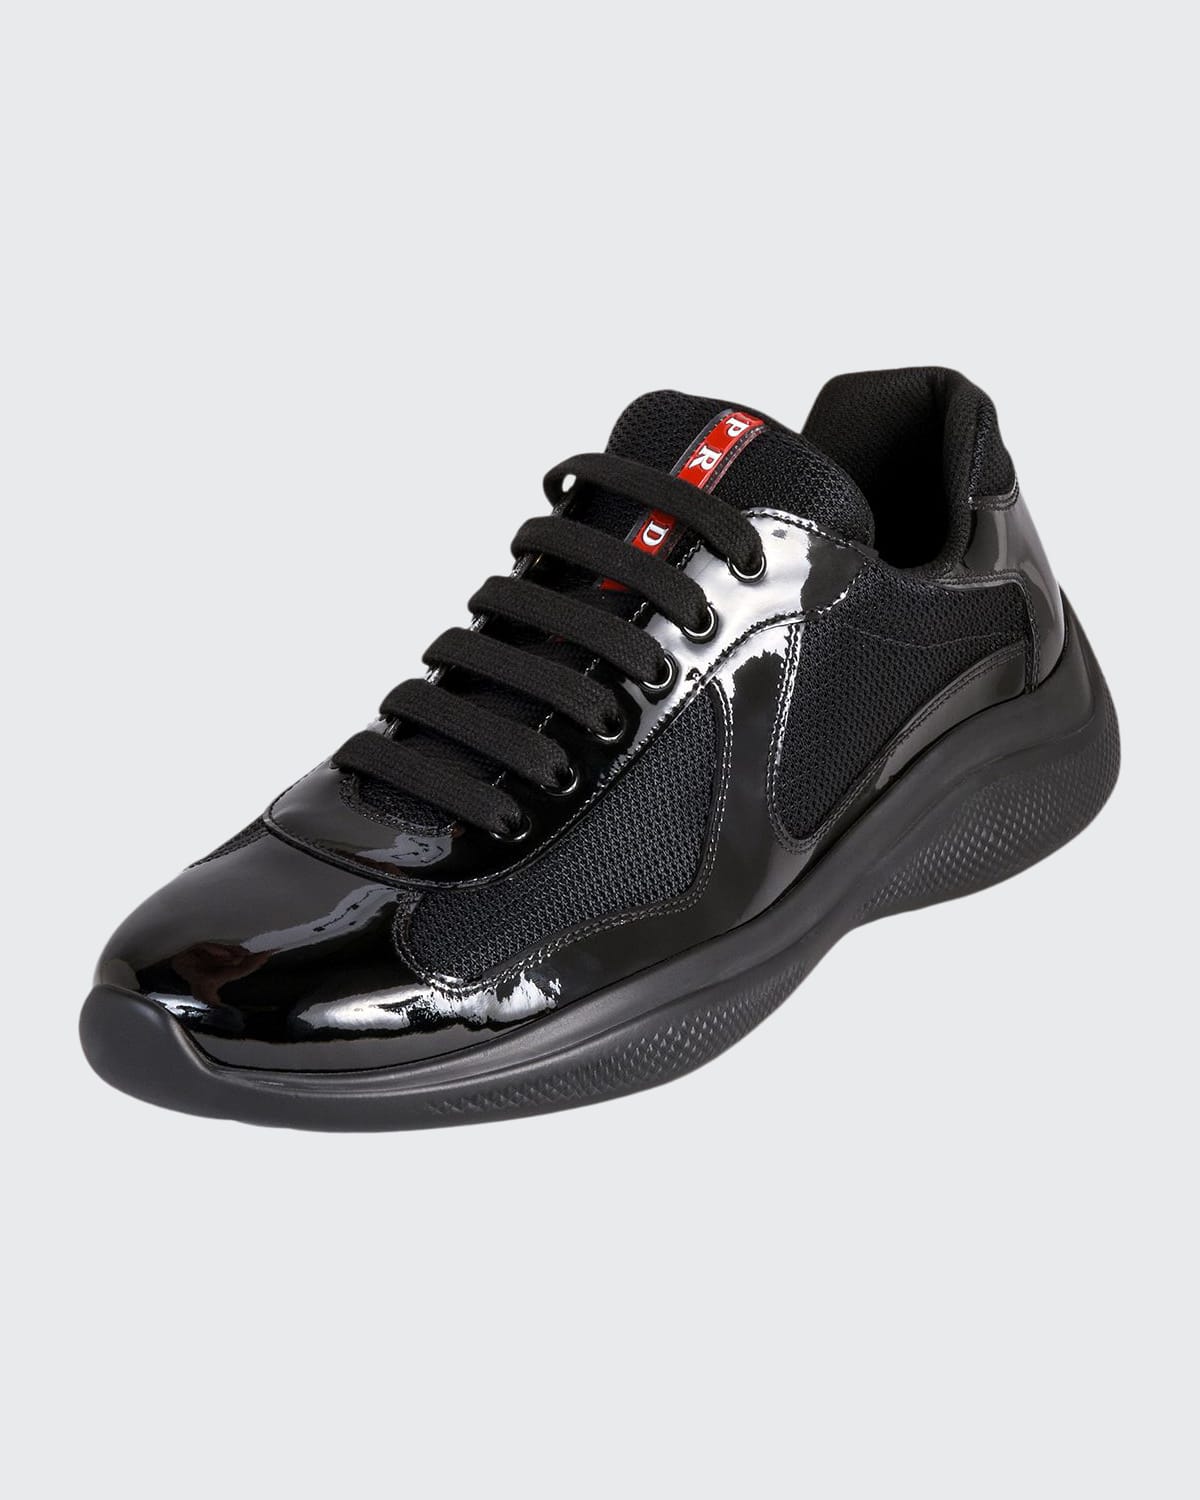 Prada Rubber Sole Sneaker | bergdorfgoodman.com